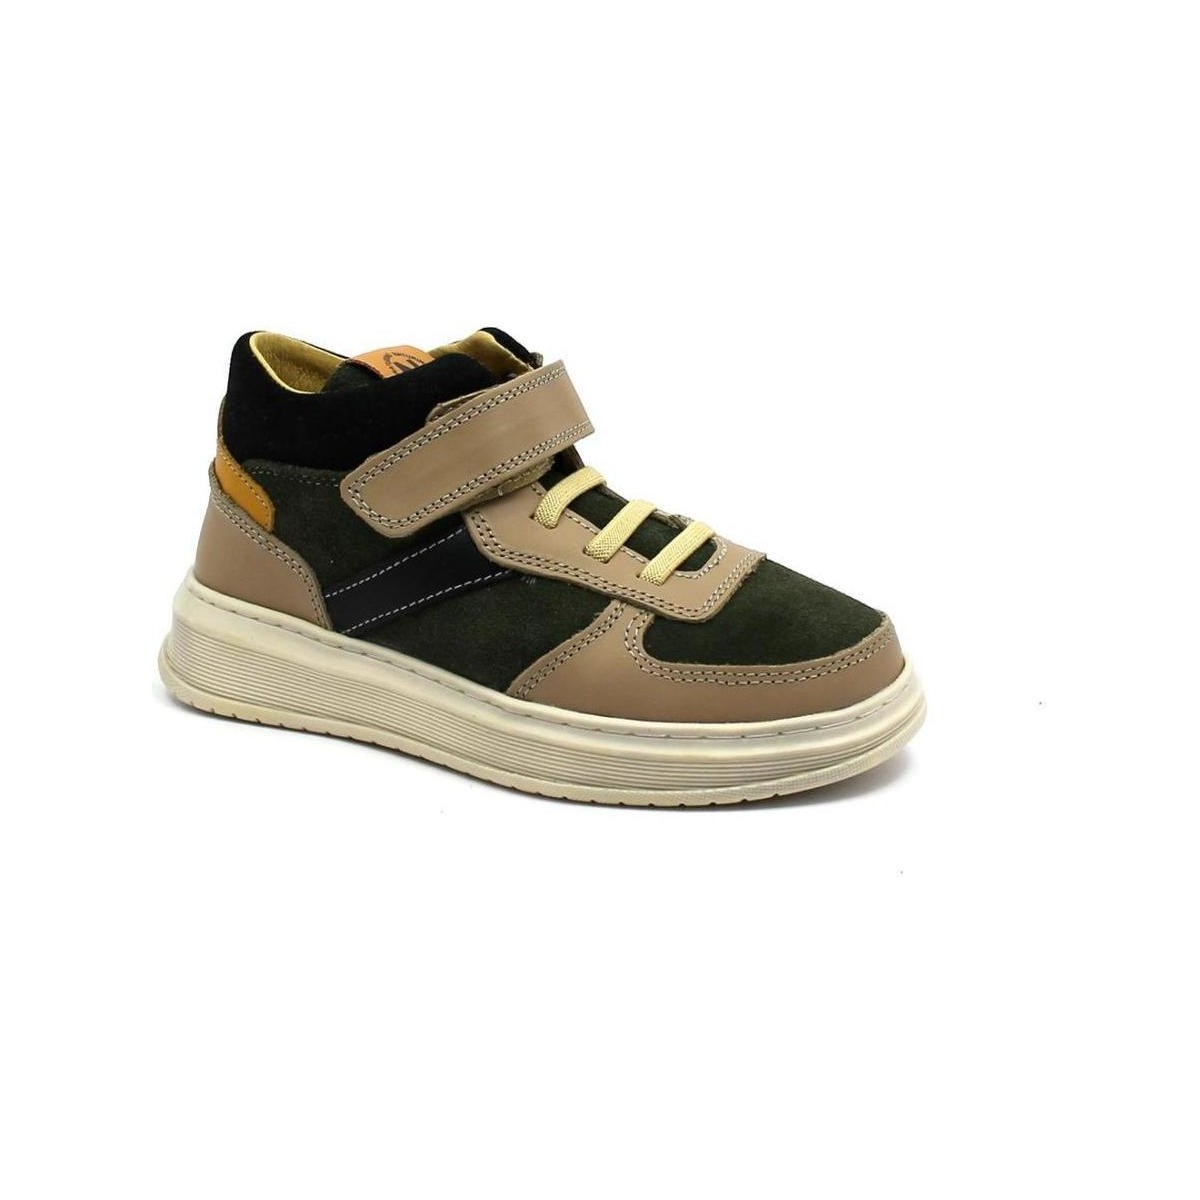 Schuhe Kinder Sneaker Low Naturino NAT-I22-17103-TM-b Beige